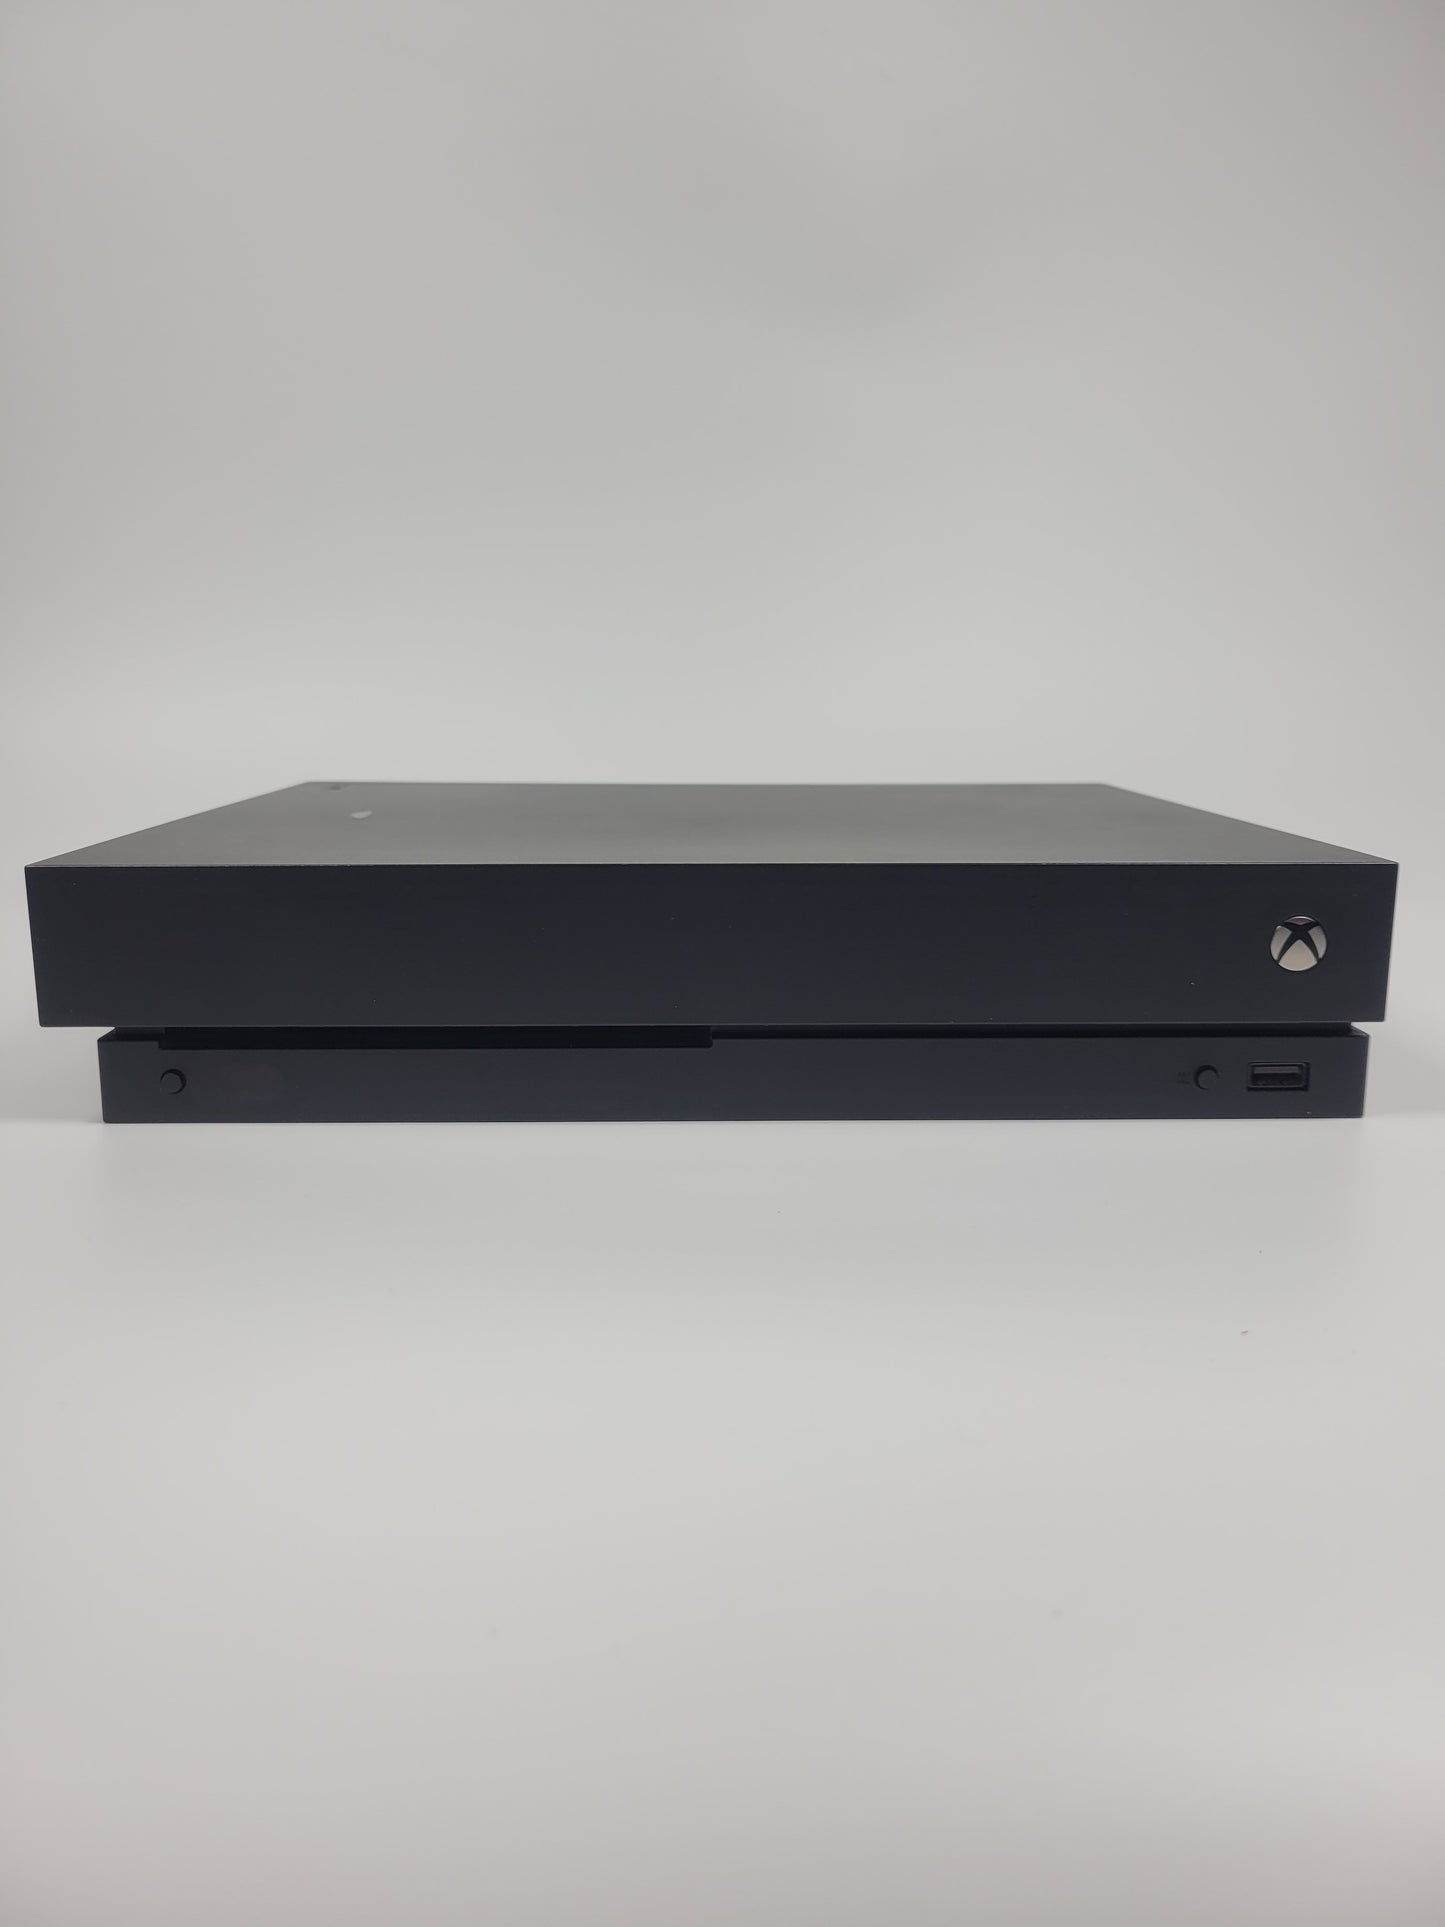 Microsoft Xbox One X 1TB Console Gaming System Black 1787